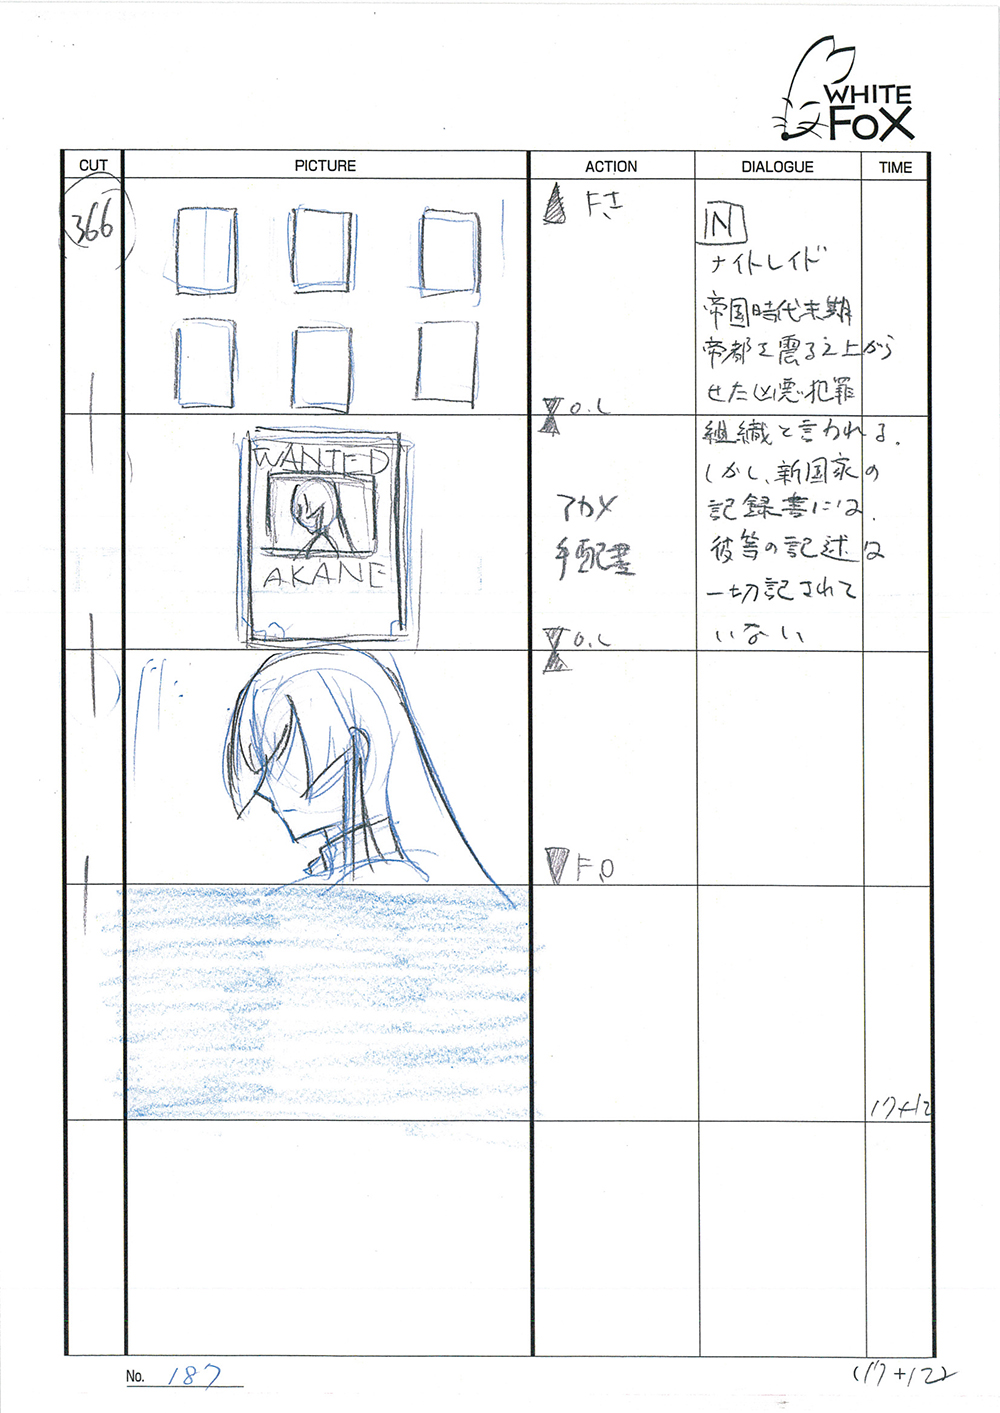 Akame ga Kill Episode 24 Storyboard Leak 192